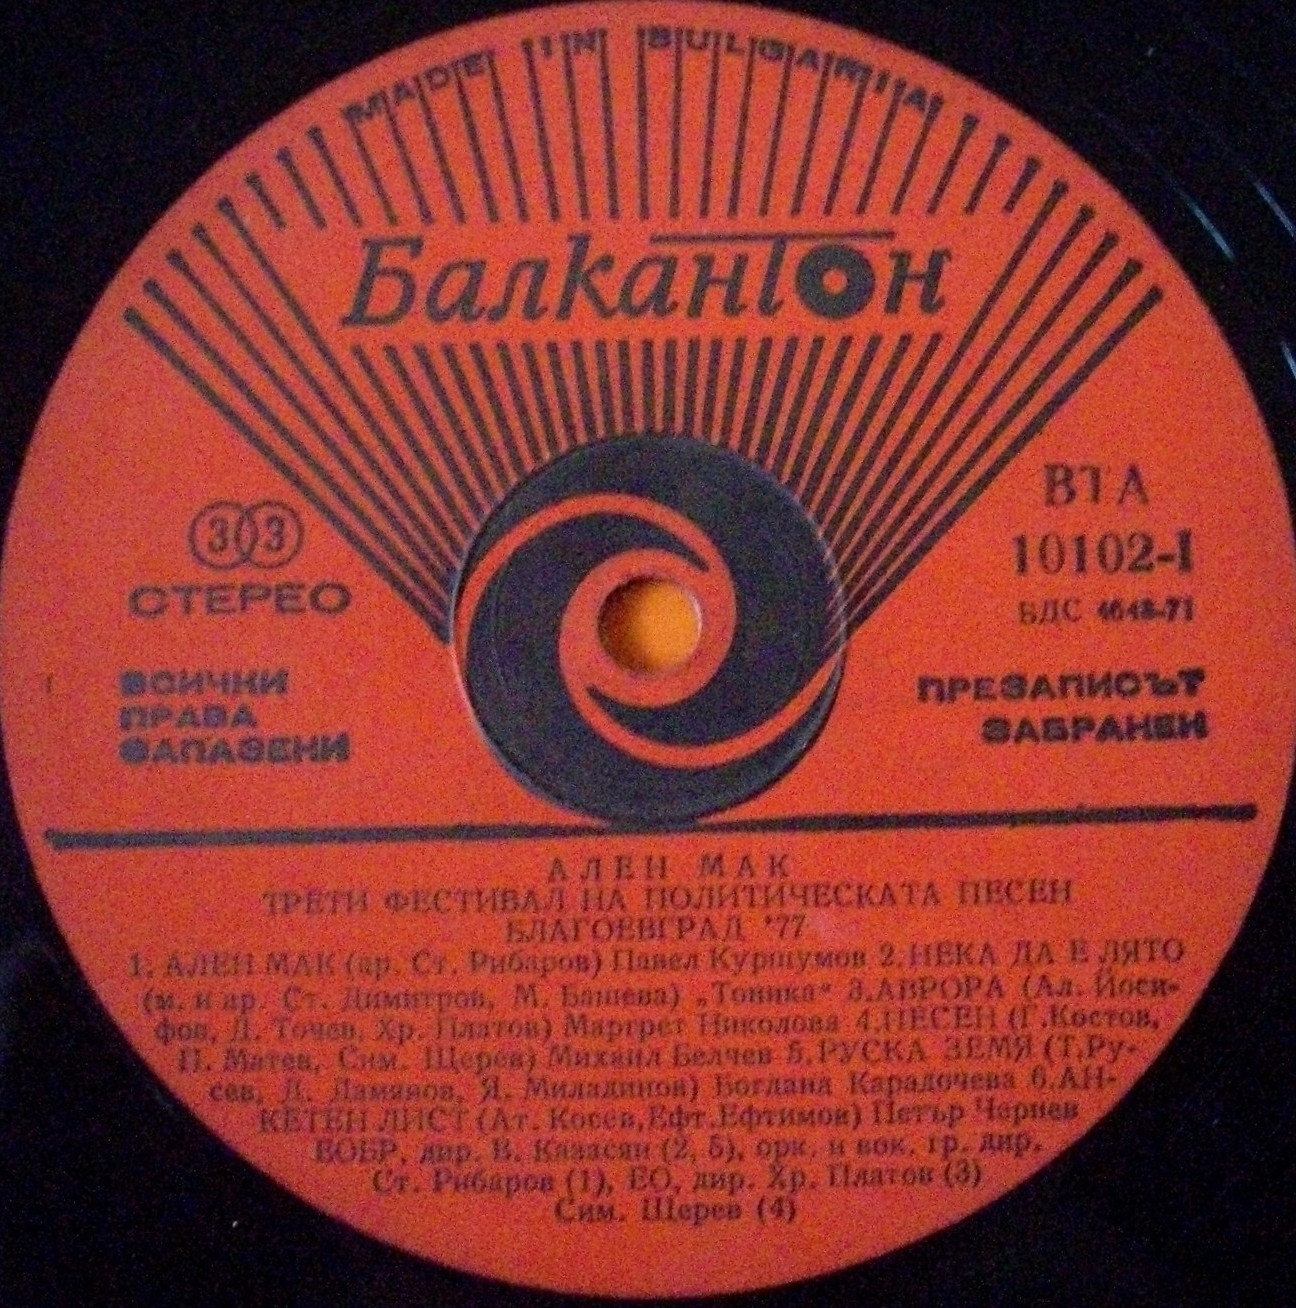 Трети фестивал на политическата песен "Ален мак" - Благоевград '77